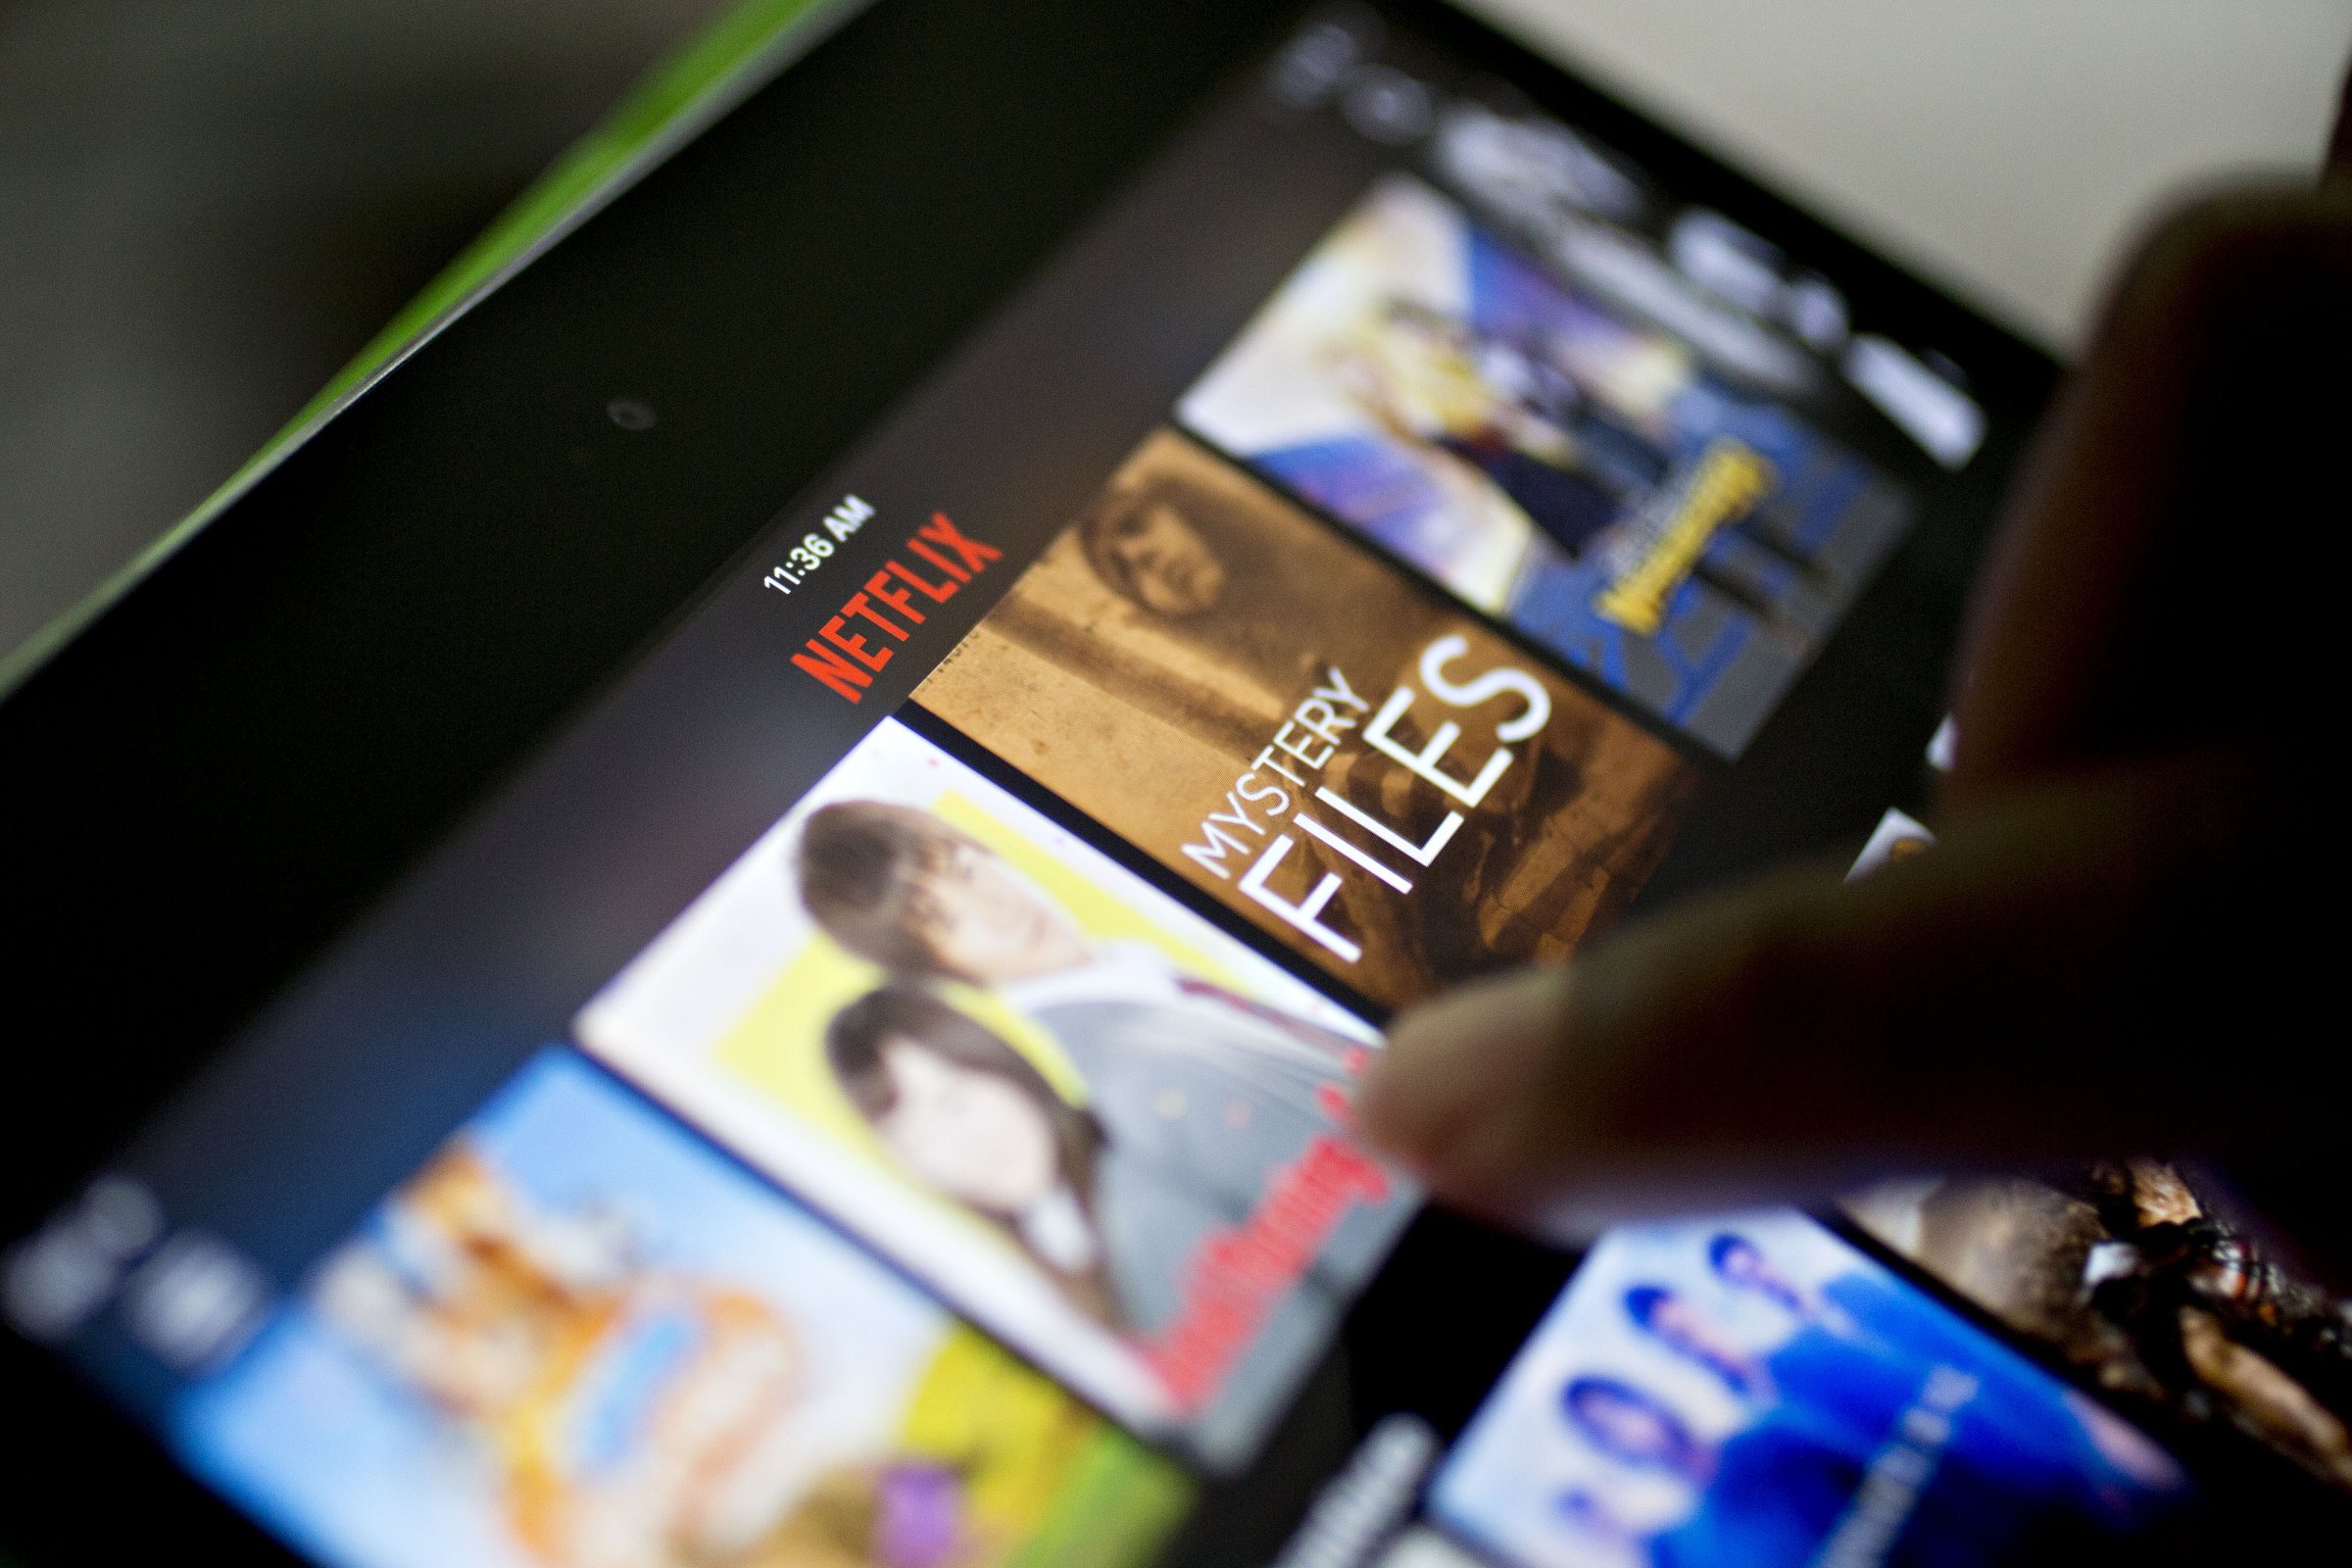 Netflix Inc. Illustrations Ahead Of Earnings Figures